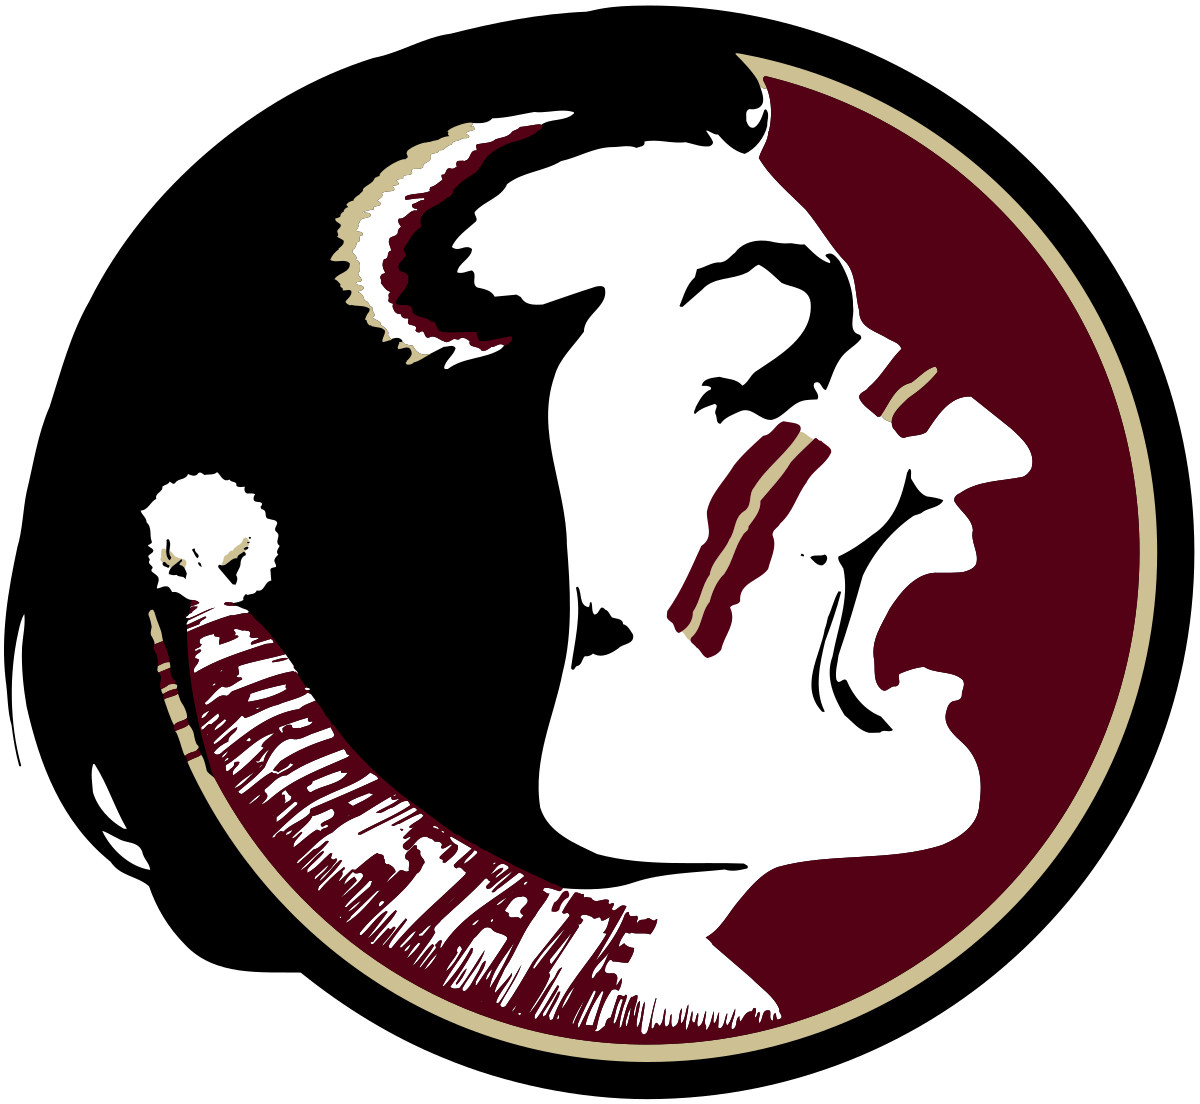 Florida State University School Logo - Florida State Seminoles football team